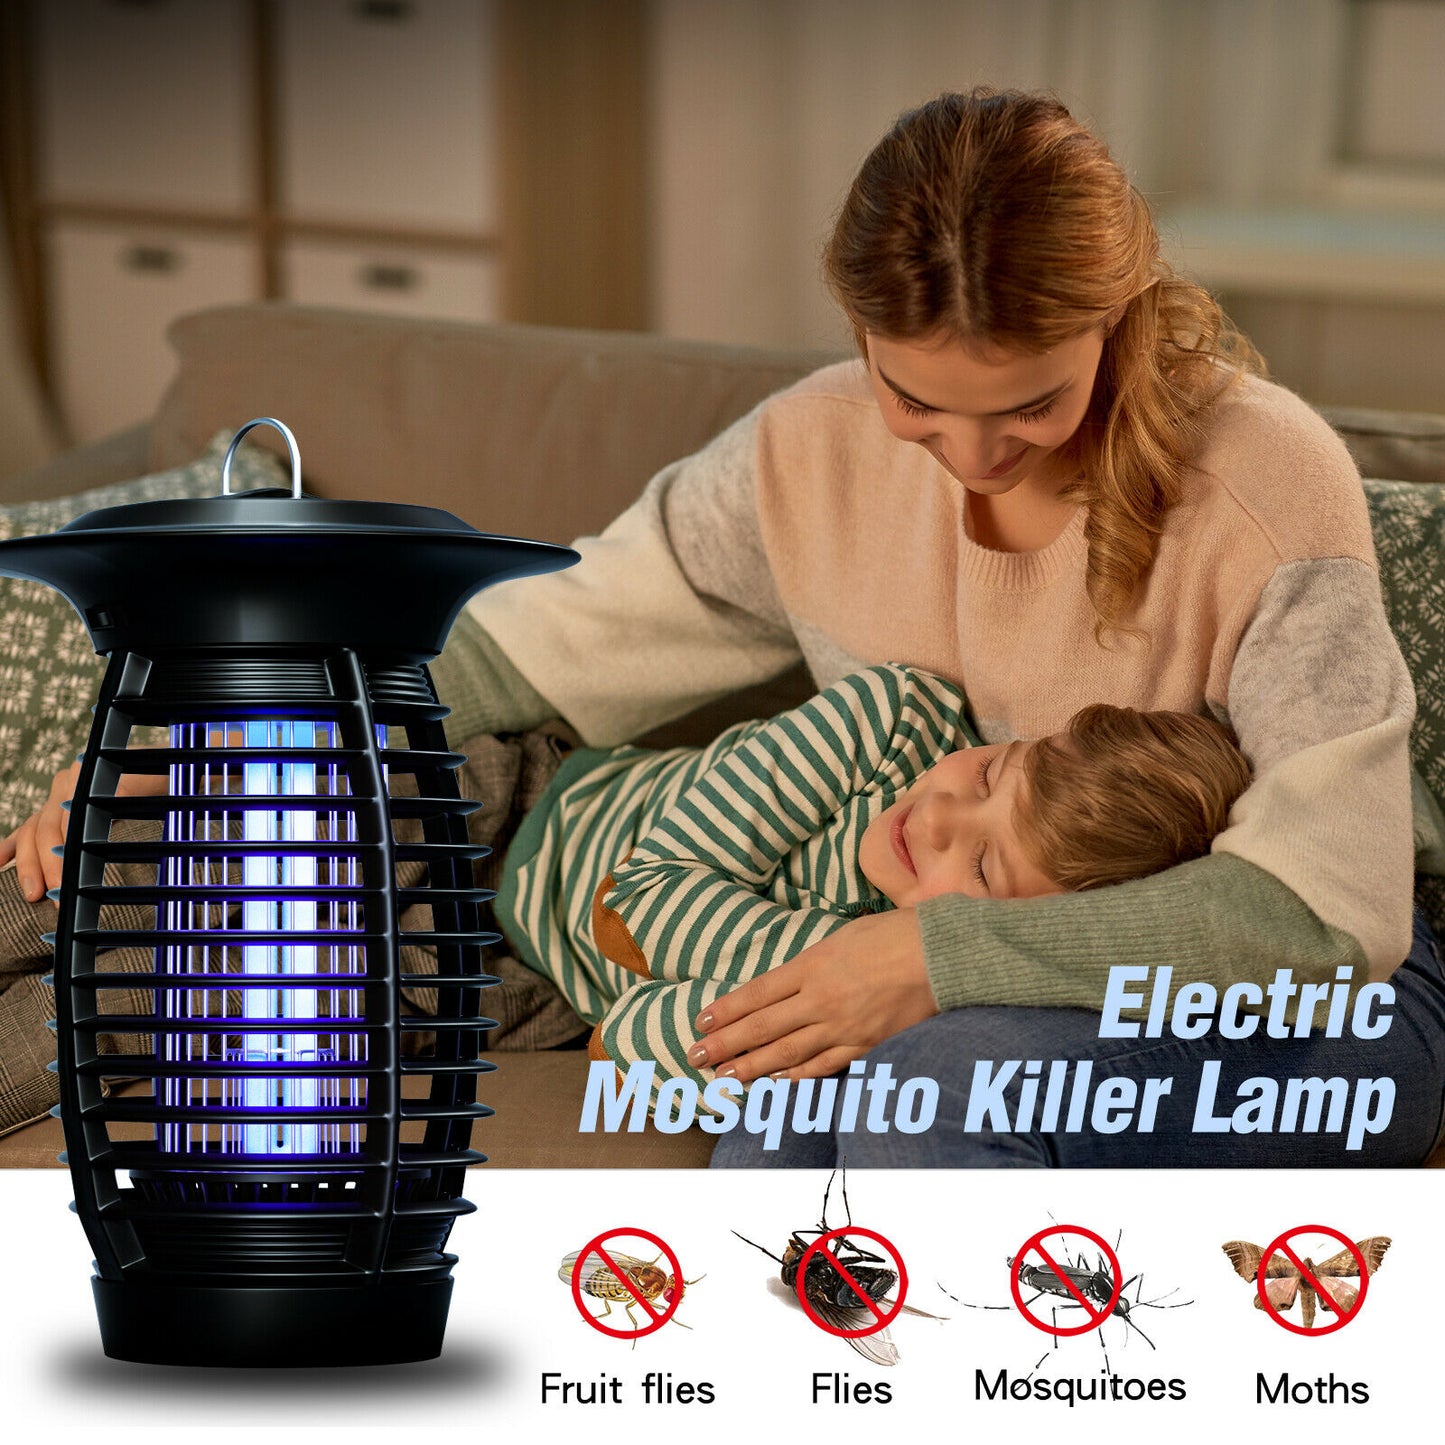 Potente lámpara eléctrica para matar mosquitos, moscas, insectos, Zapper, trampa para matar plagas